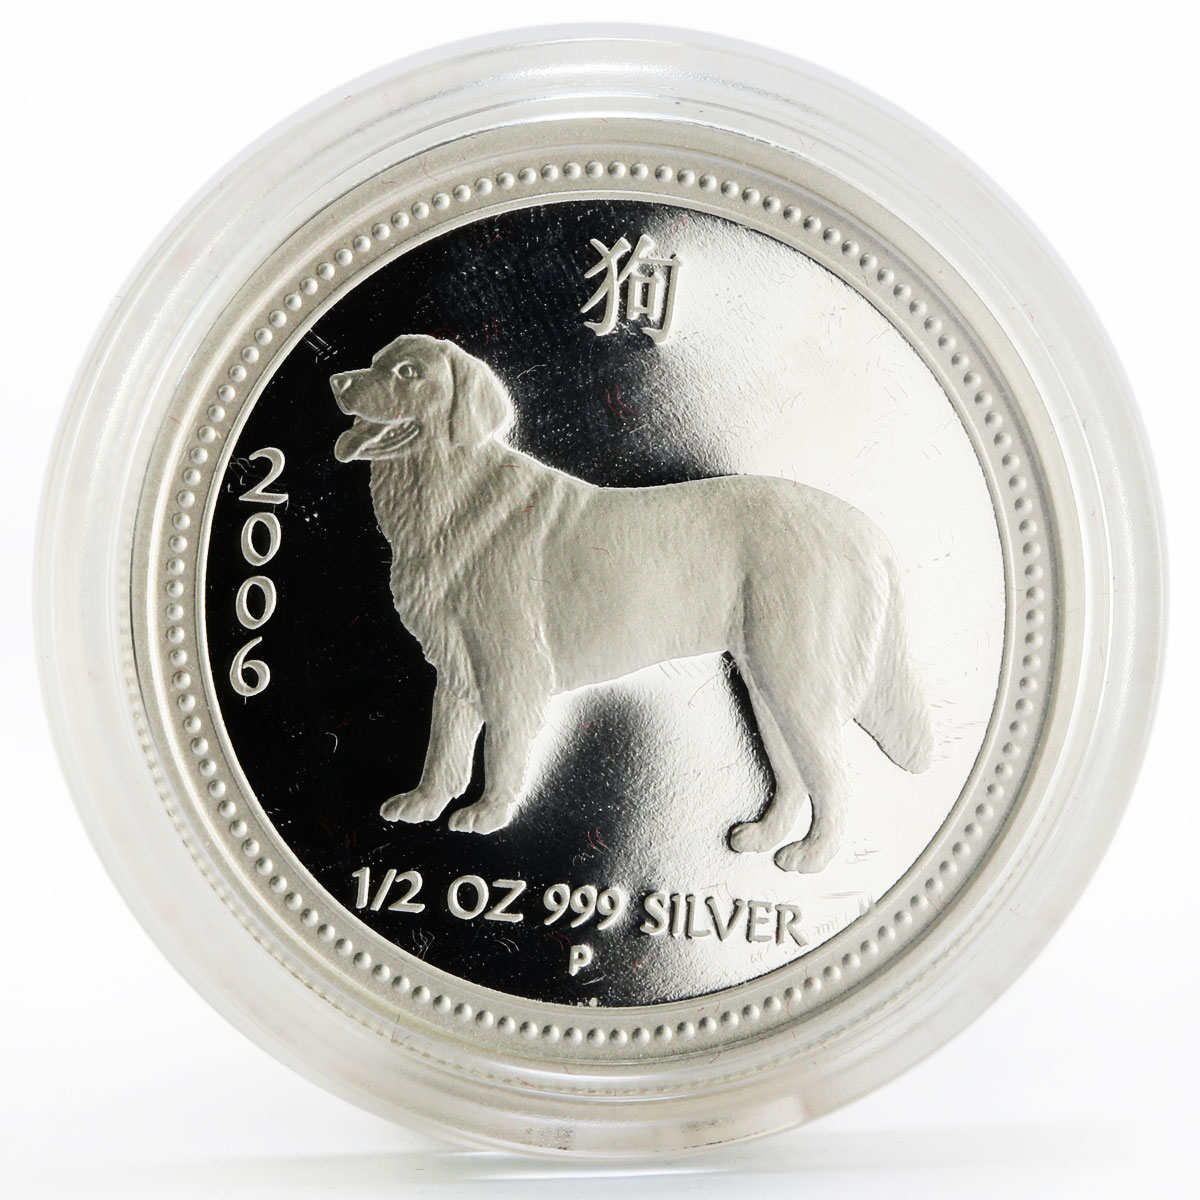 Australia 50 cents Lunar Calendar series I Year of Dog silver proof coin 2006